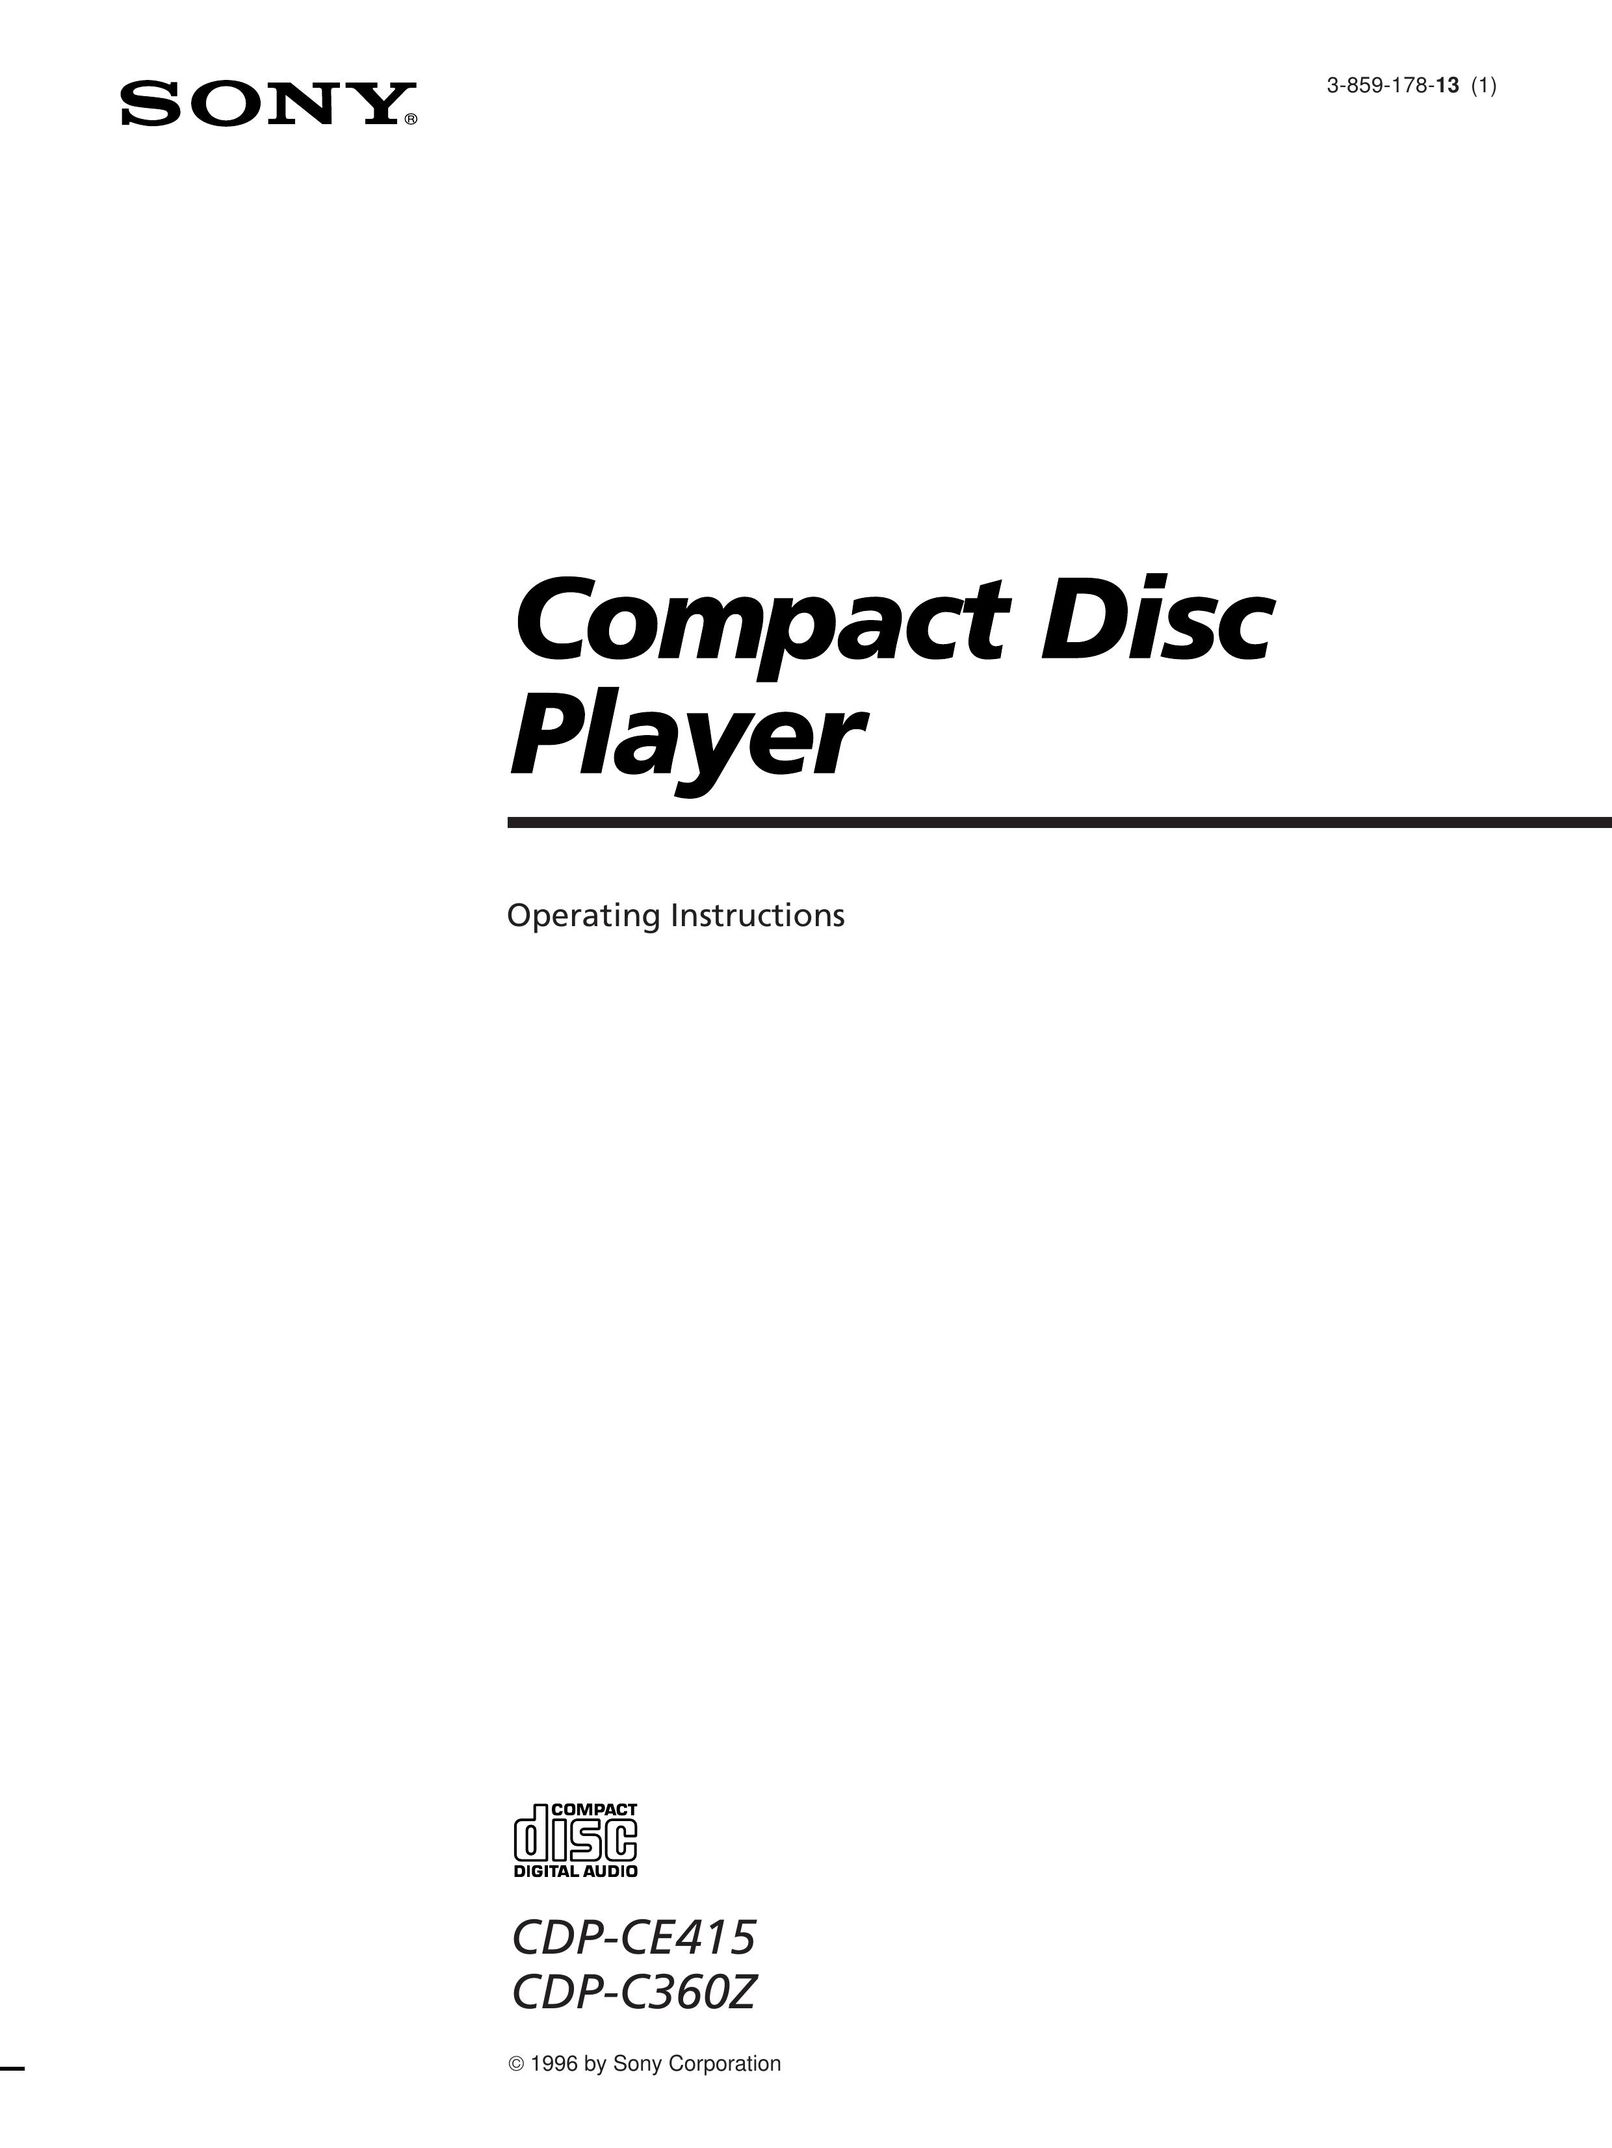 Sony CDP-C360Z CD Player User Manual